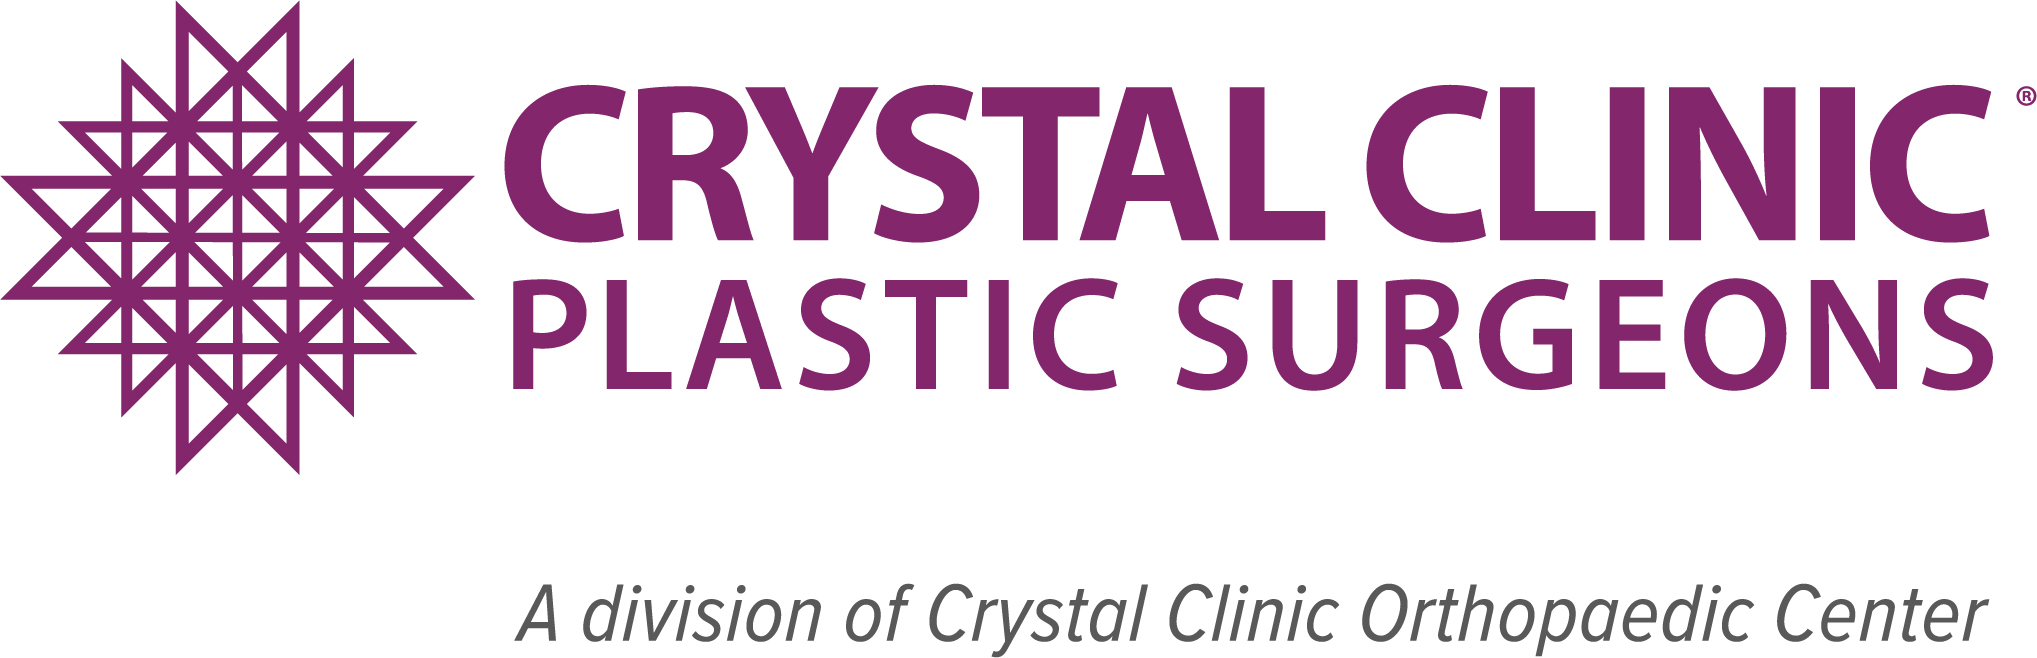 Crystal Clinic Plastic Surgeons 